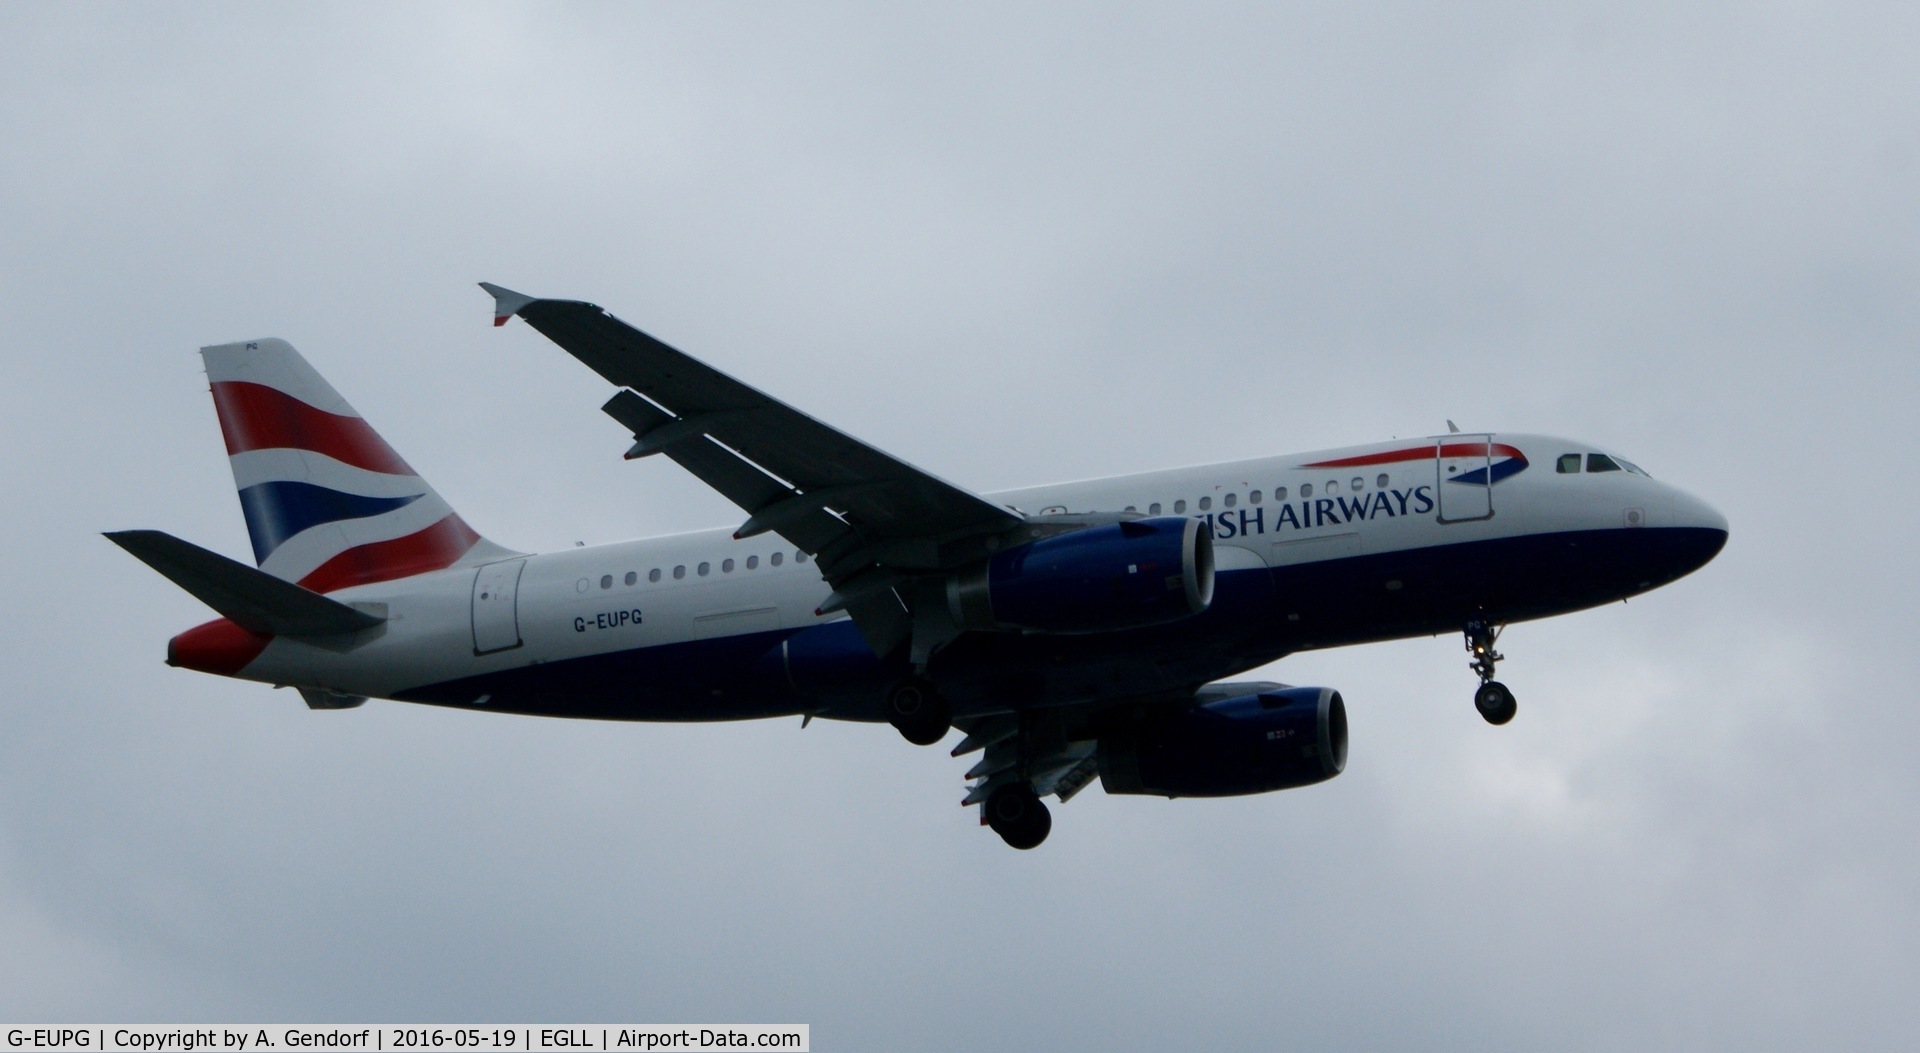 G-EUPG, 2000 Airbus A319-131 C/N 1222, British Airways, is here approaching RWY 27R at London Heathrow(EGLL)